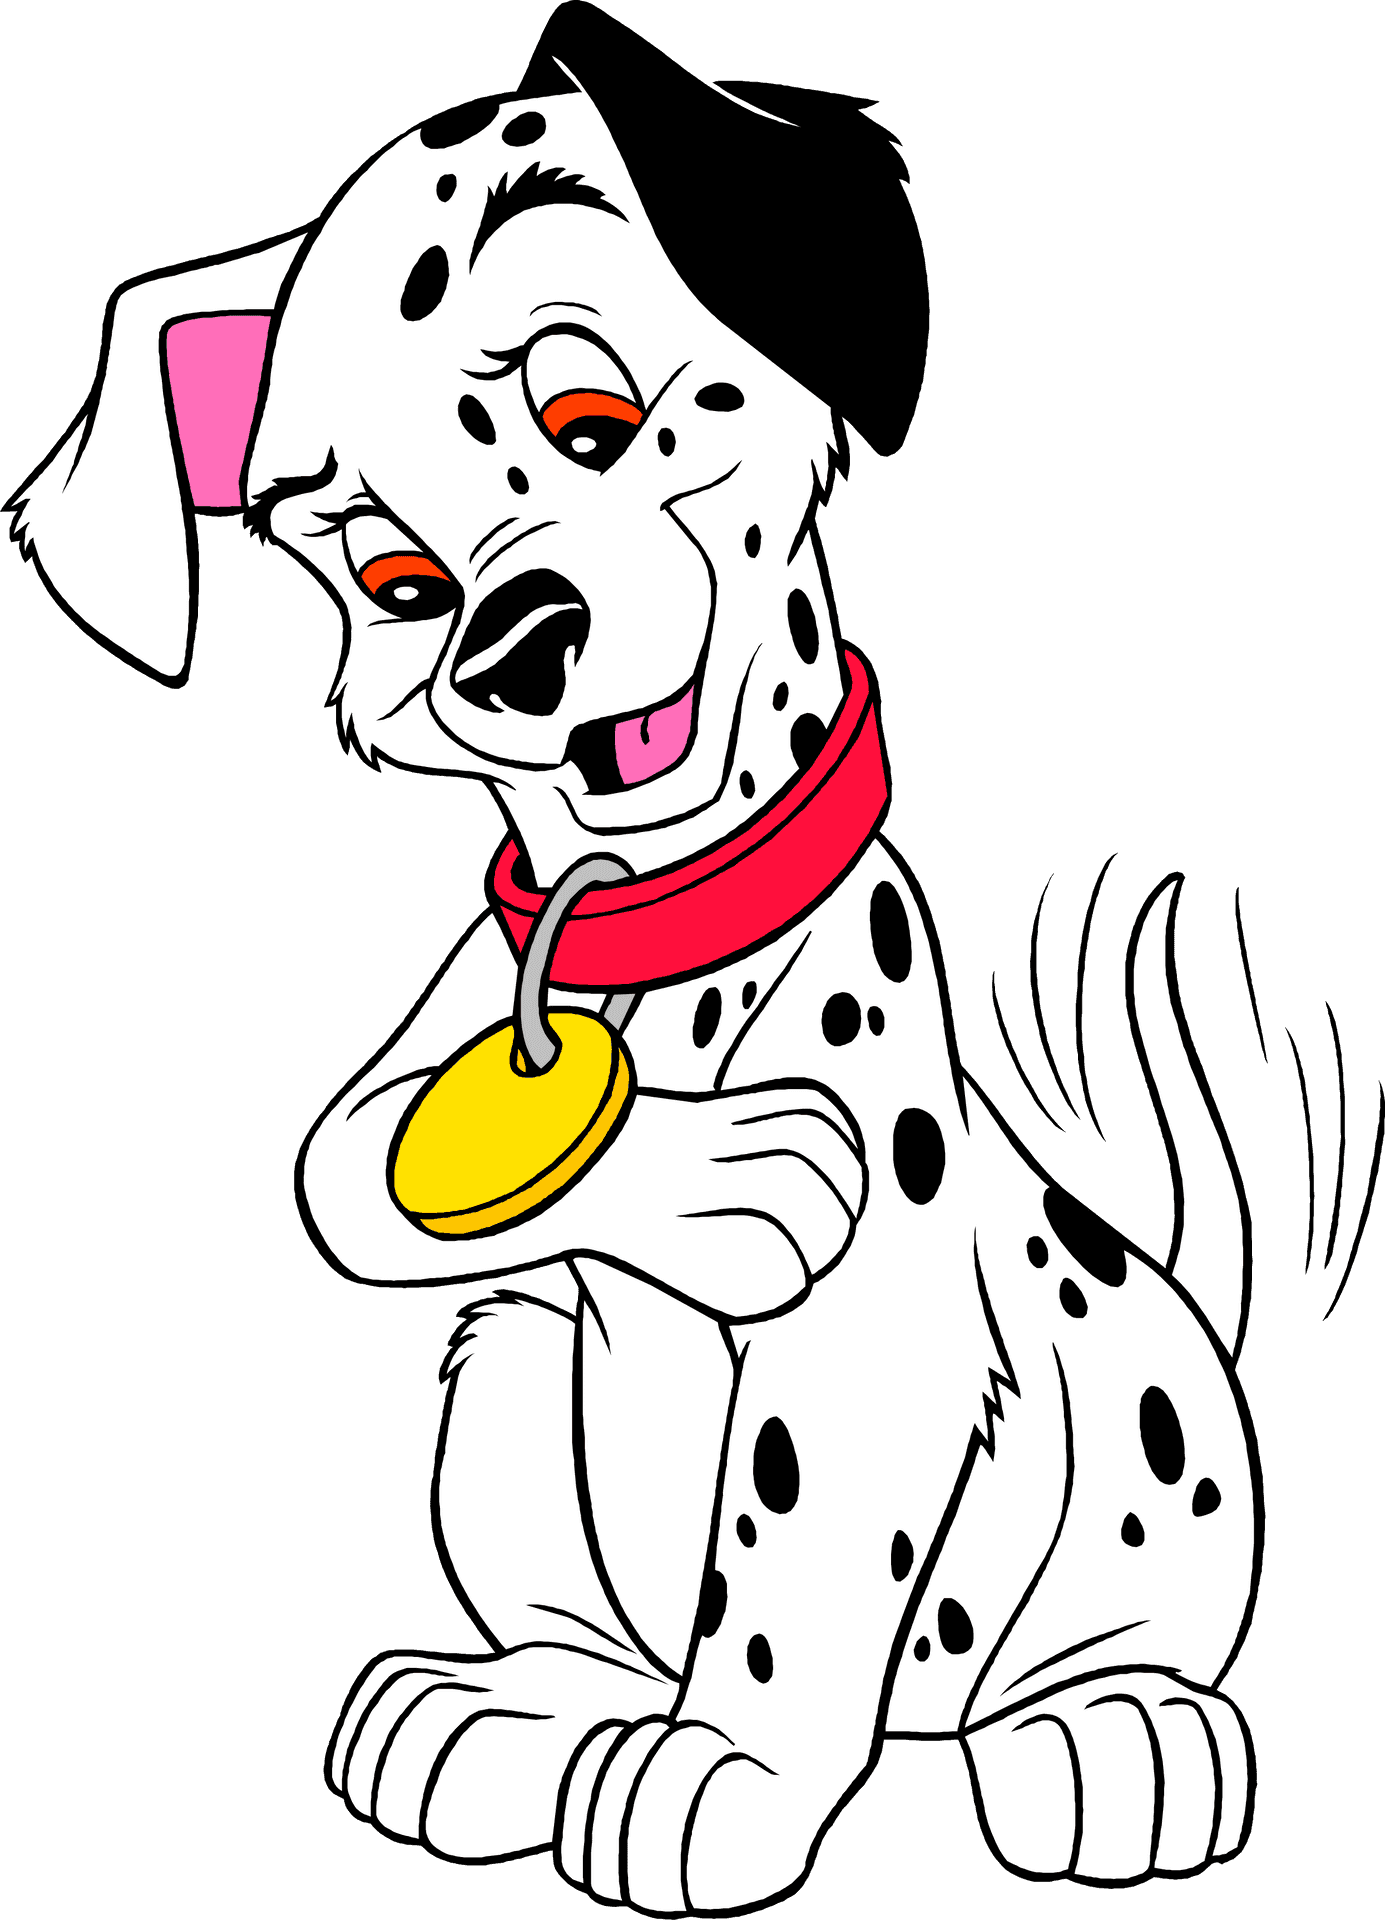 Winking Dalmatian Cartoon PNG image